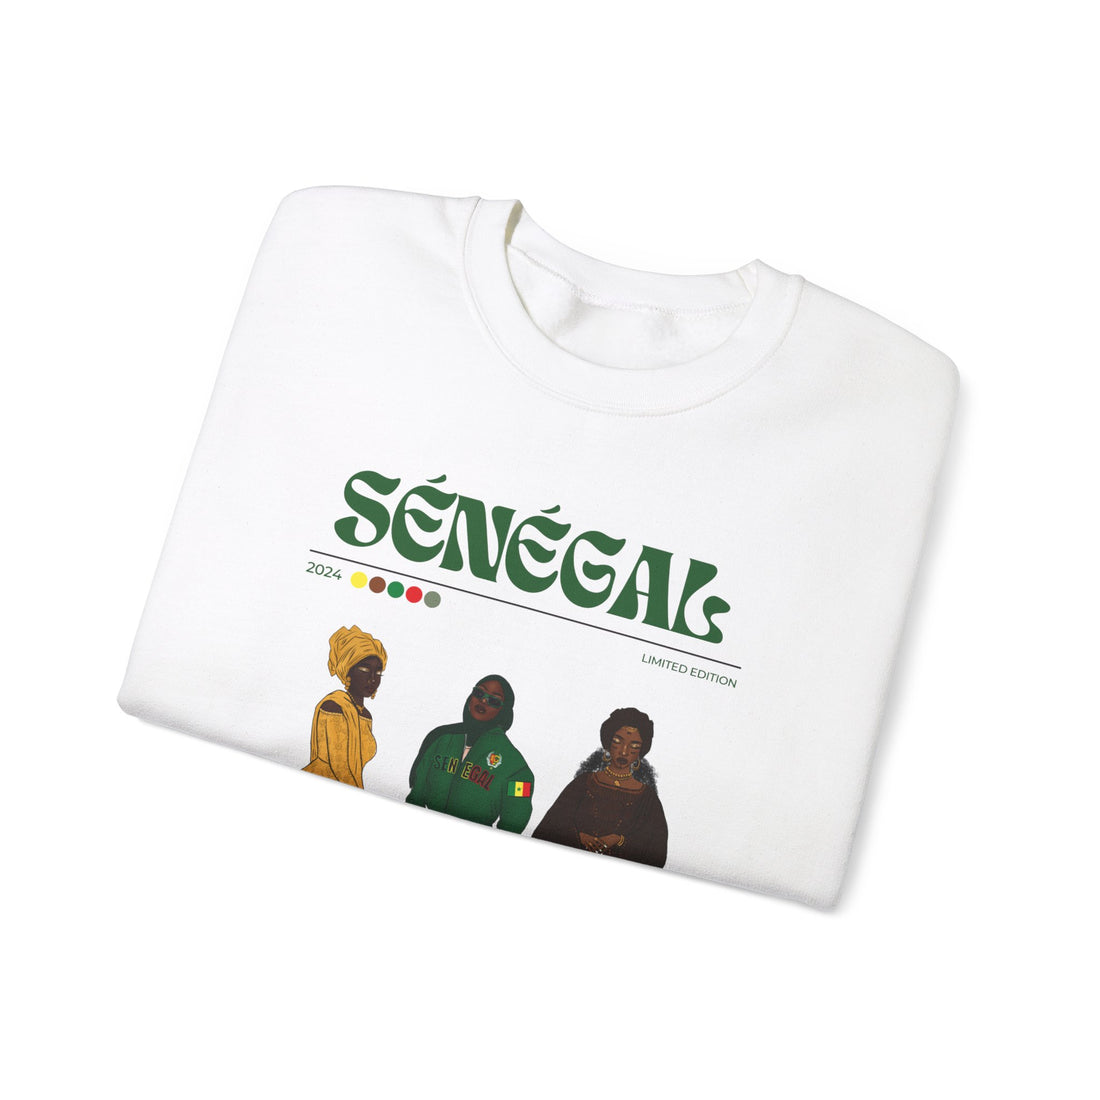 Senegal x Streetwear Series - Crewneck Sweatshirt